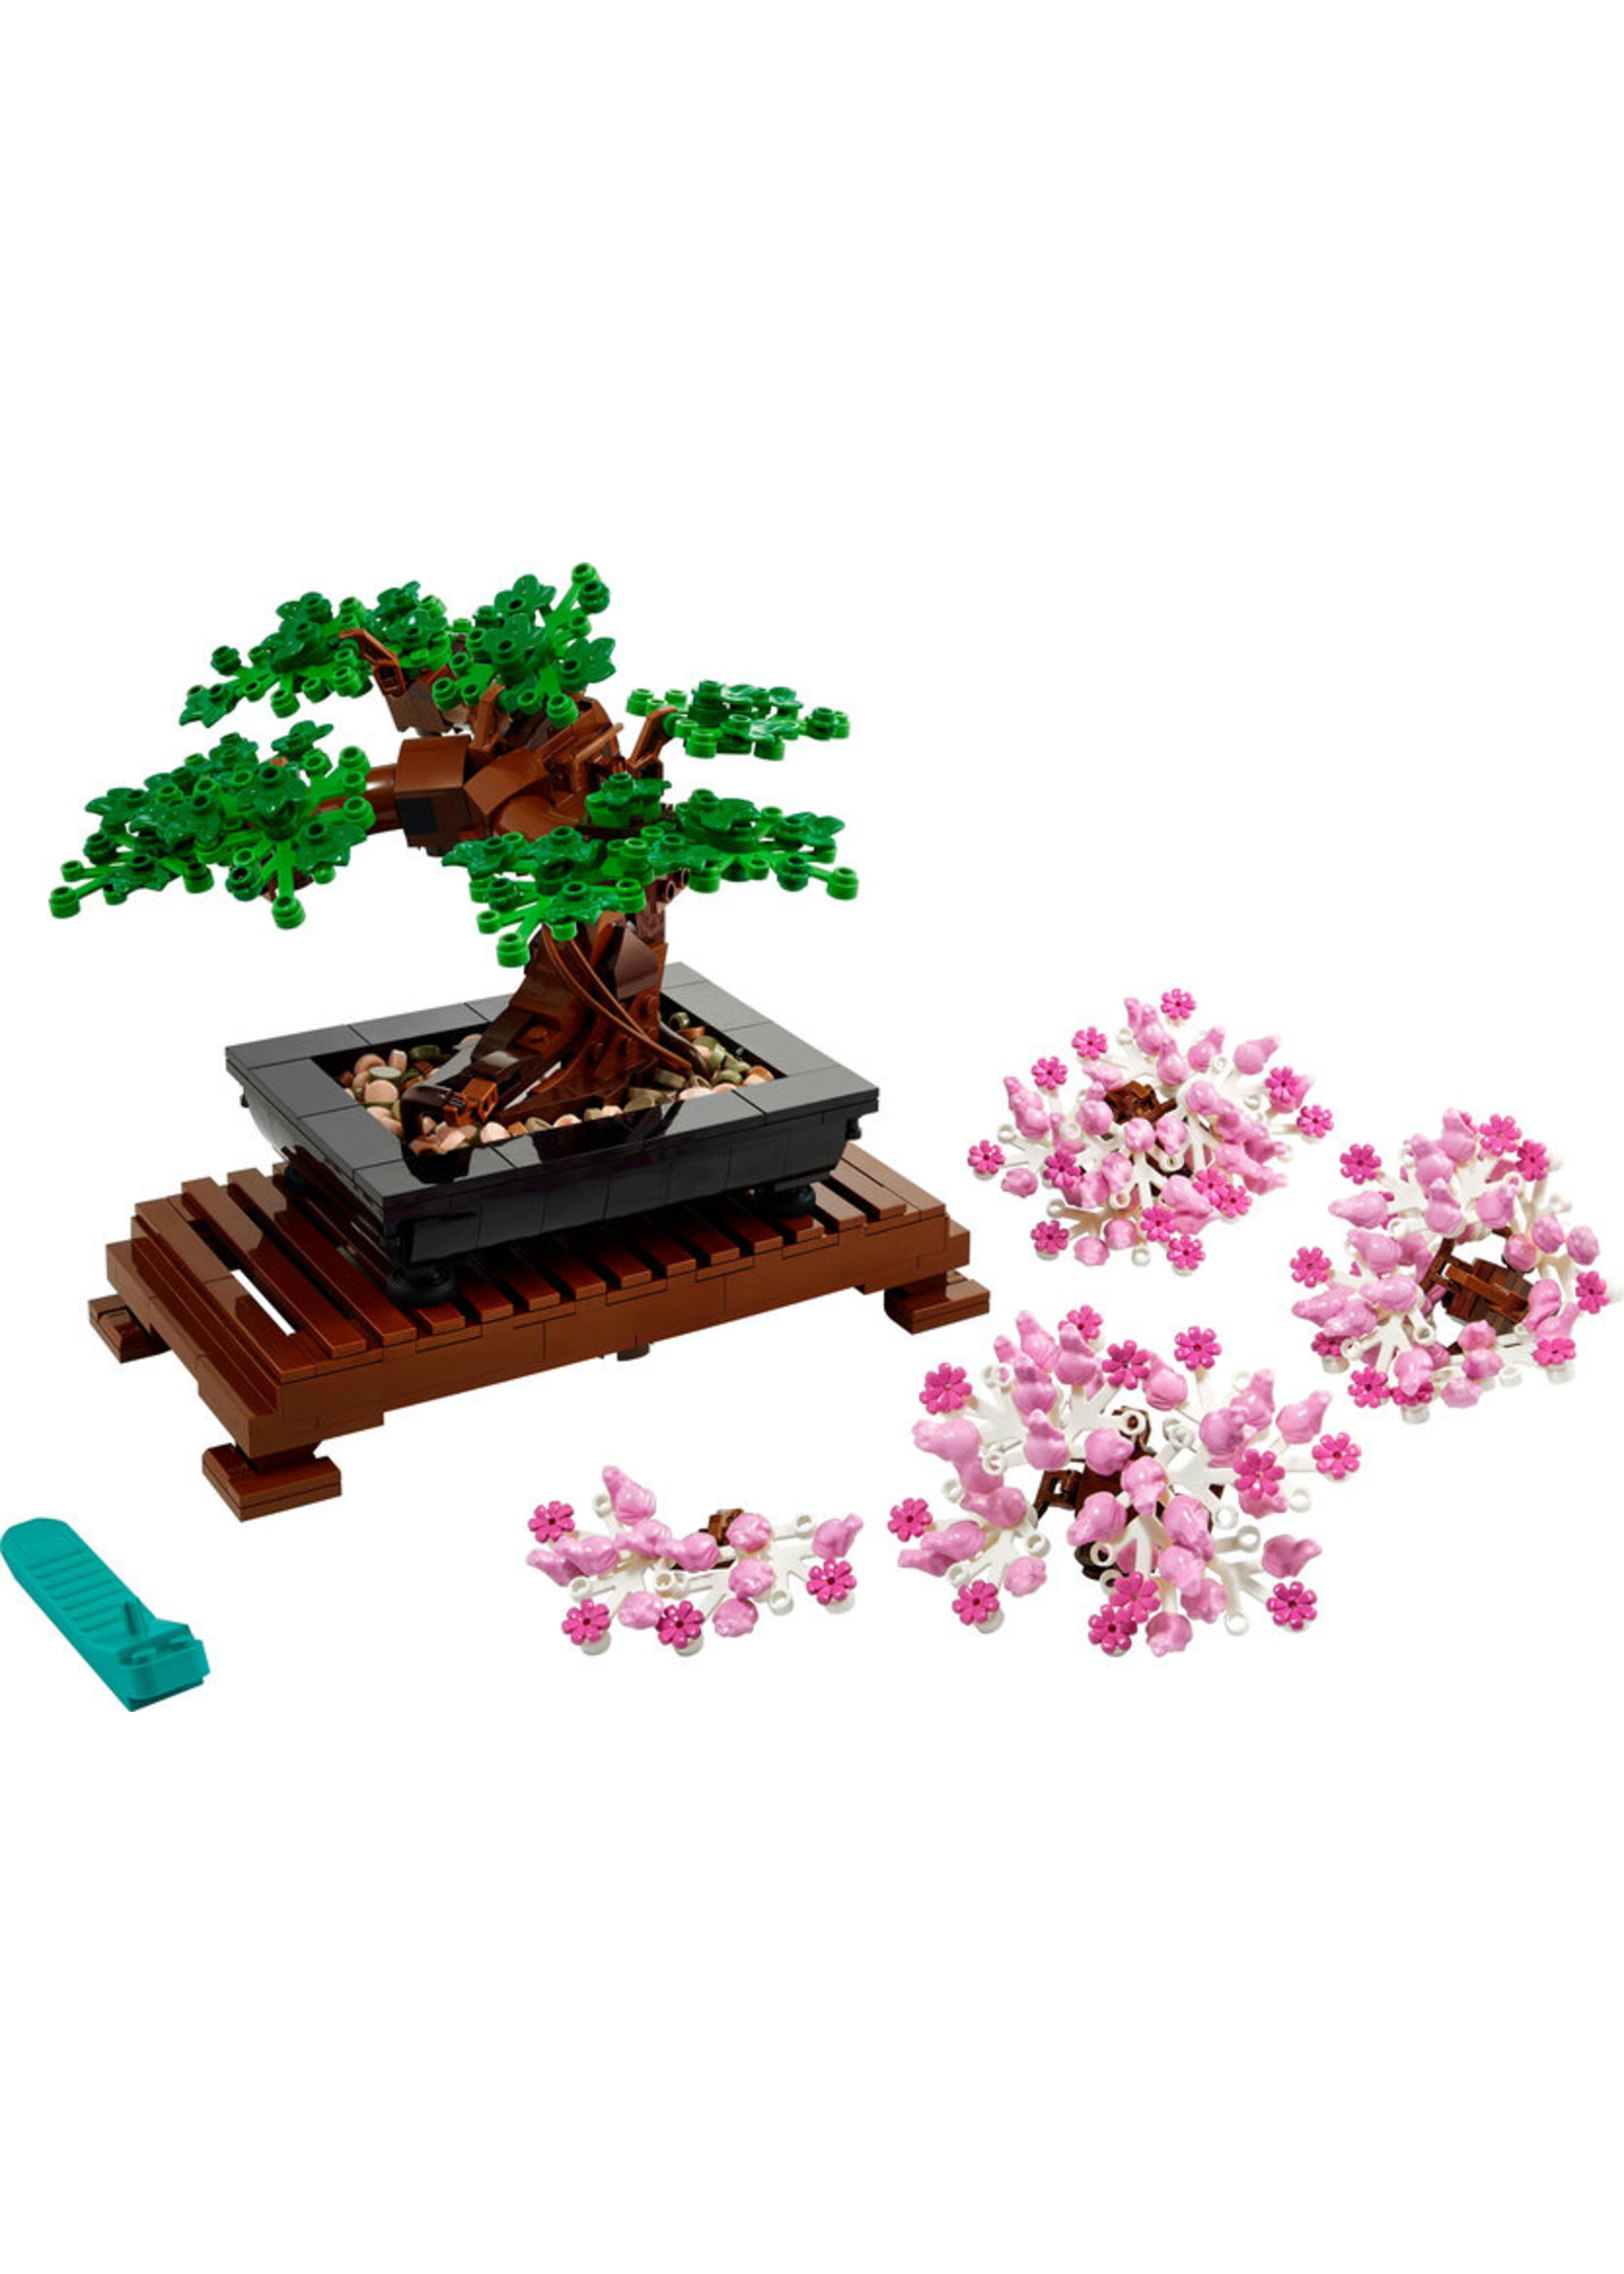 LEGO 10281 - Bonsai Tree